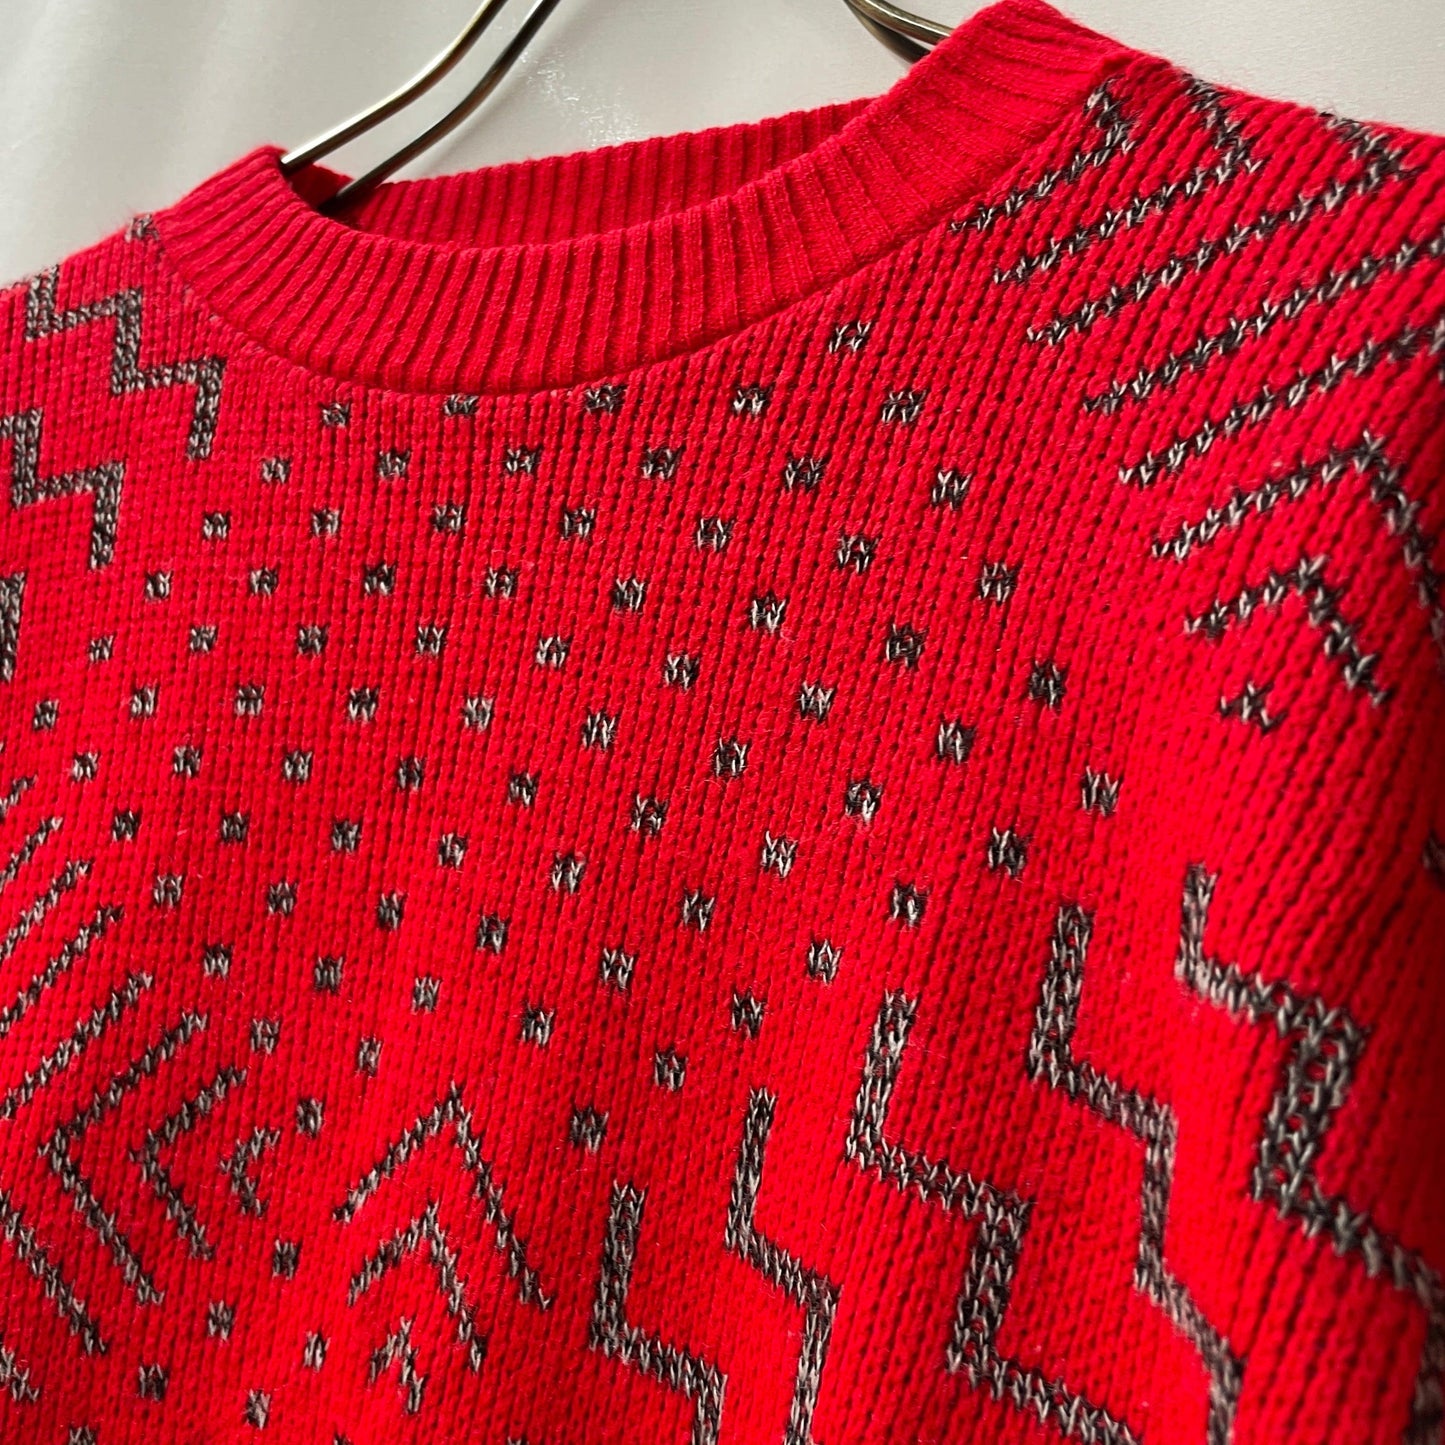 vintage knit knit/sweater